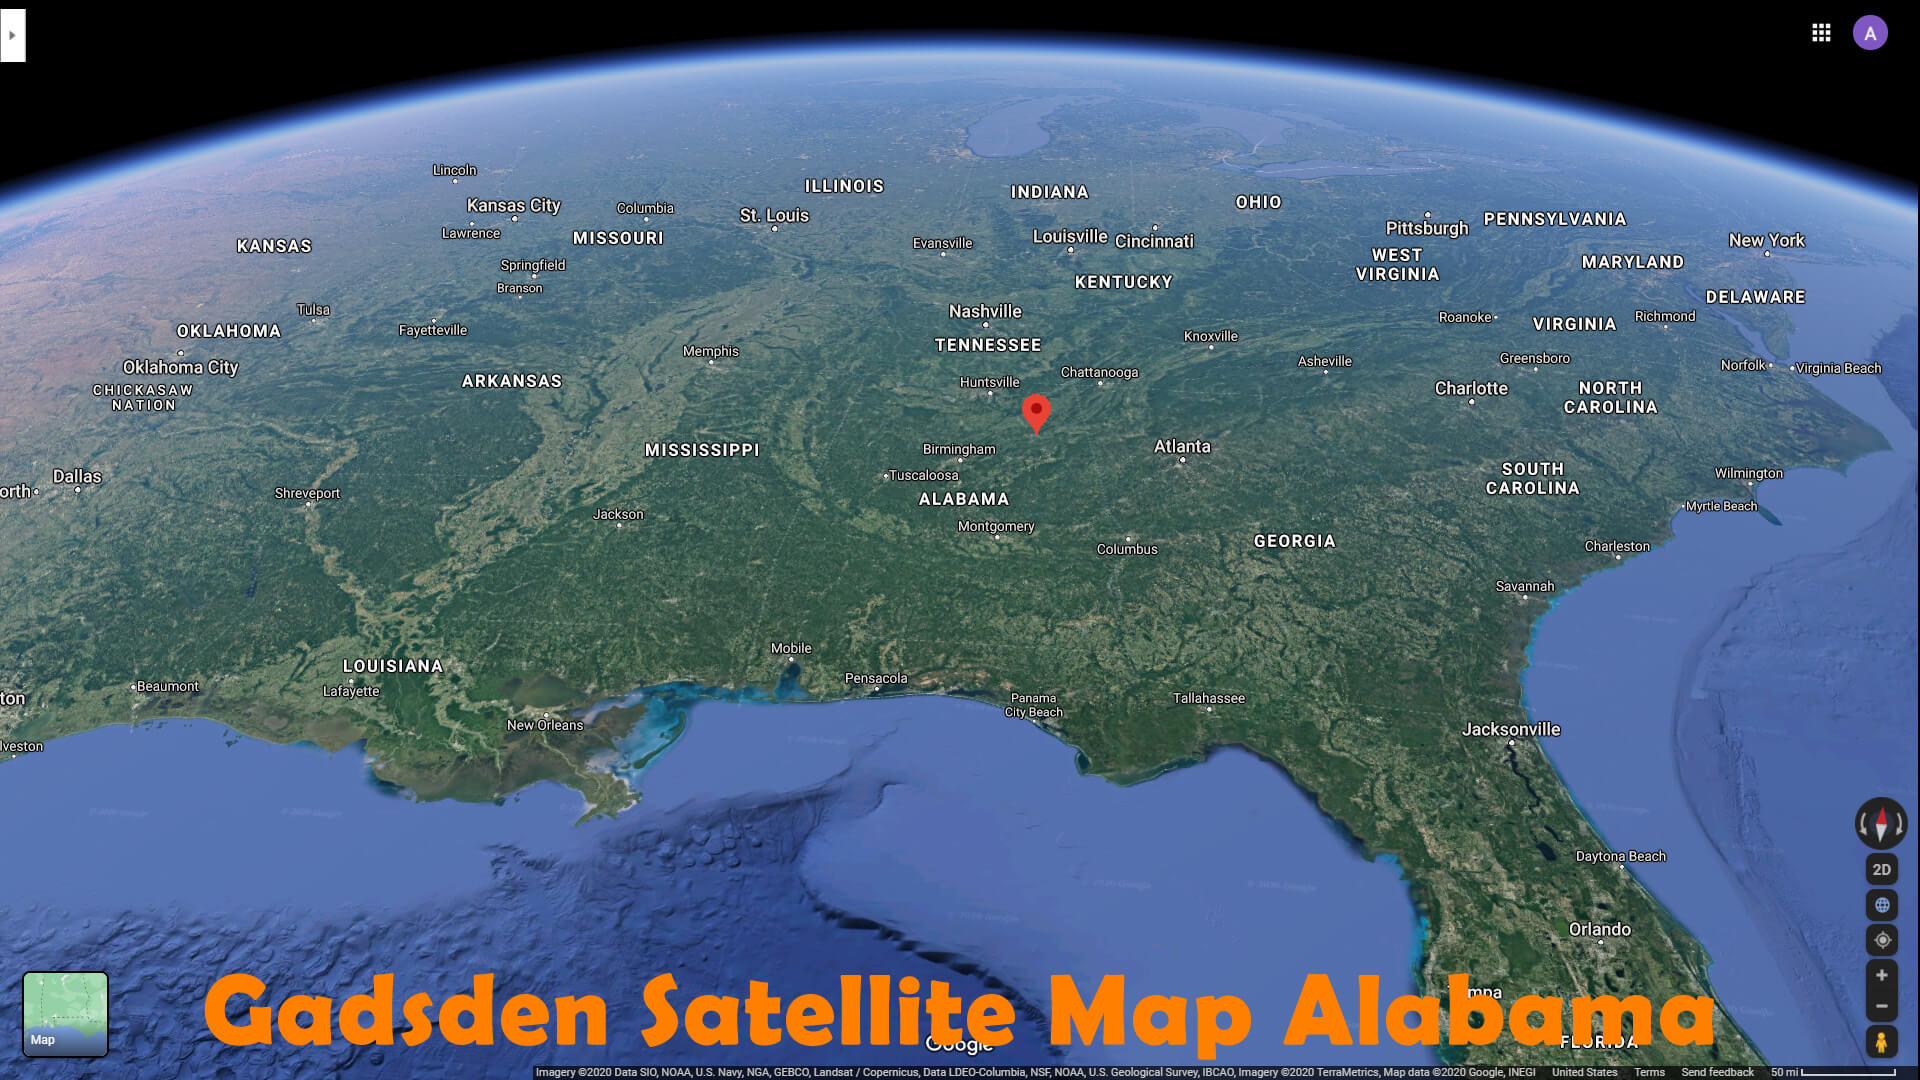 Gadsden Satellite Map Alabama